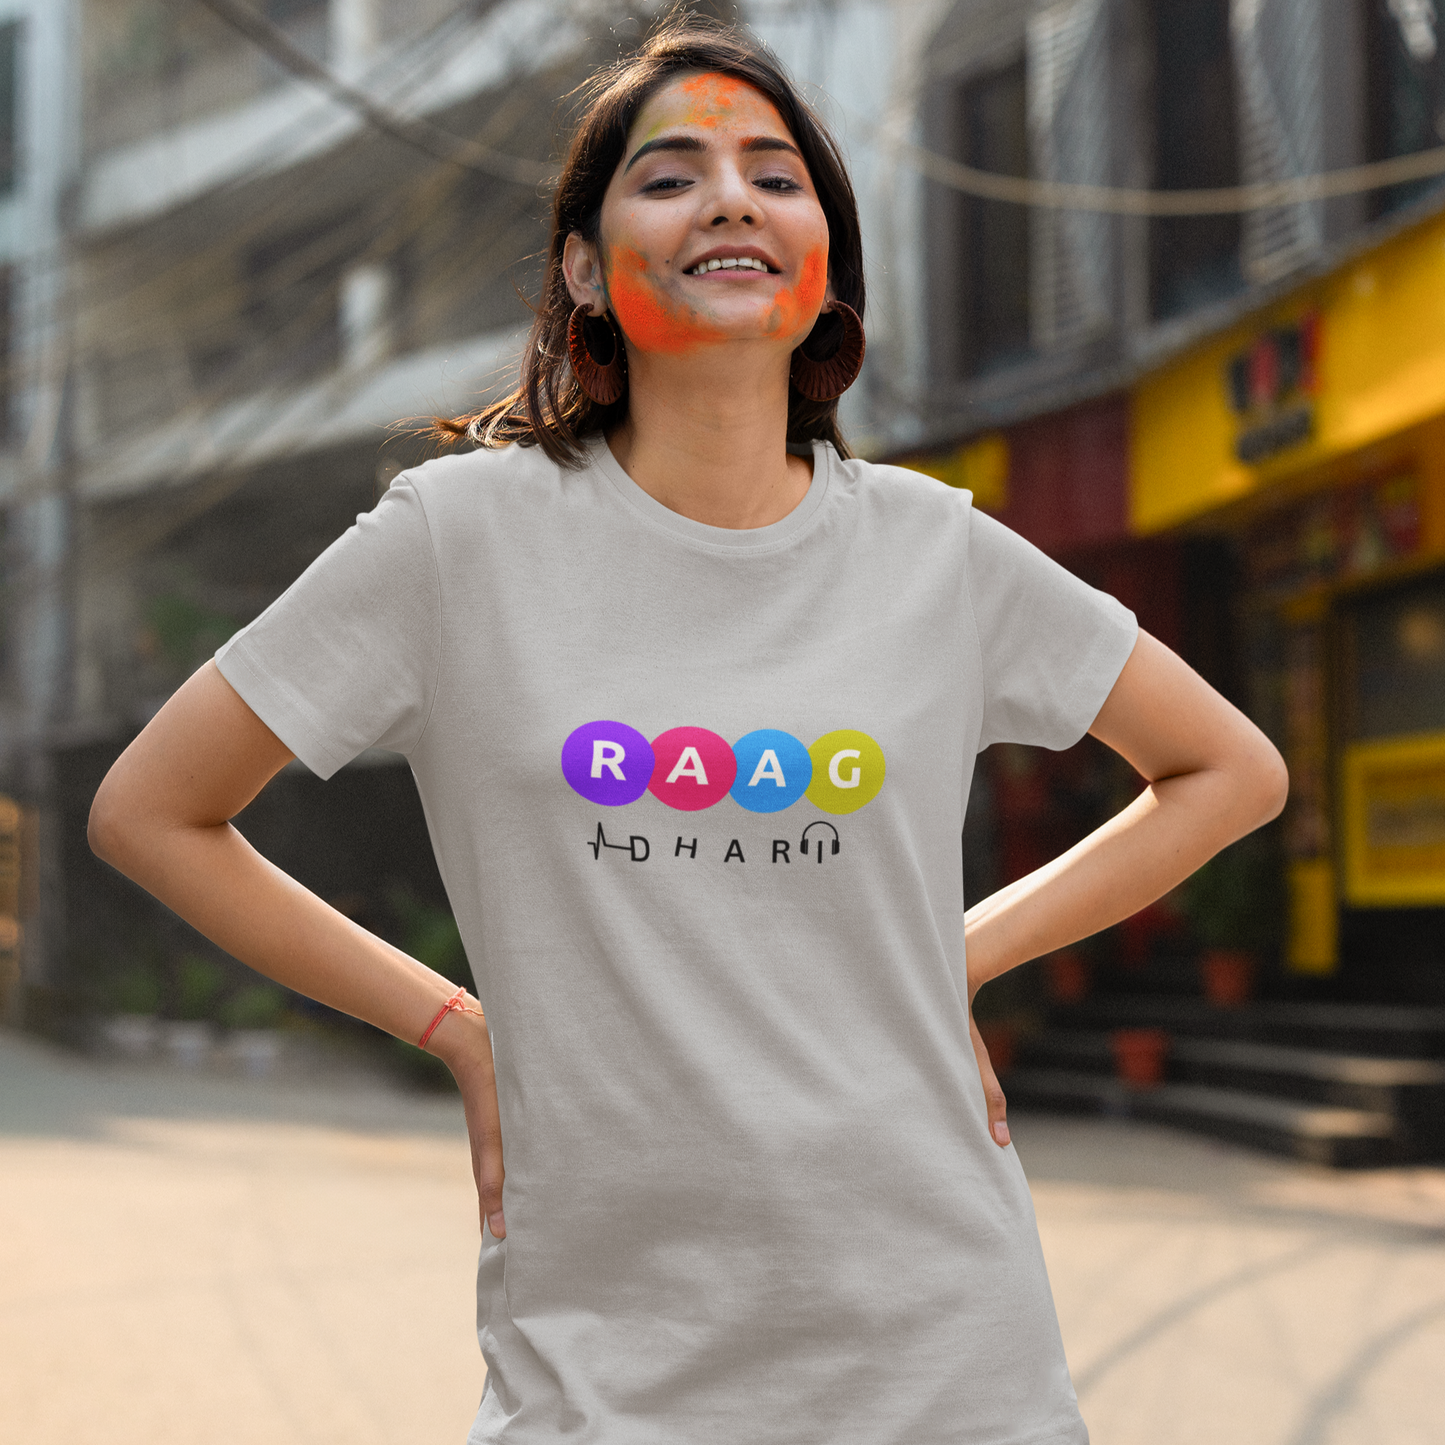 Raag Dhari Unisex T-shirt